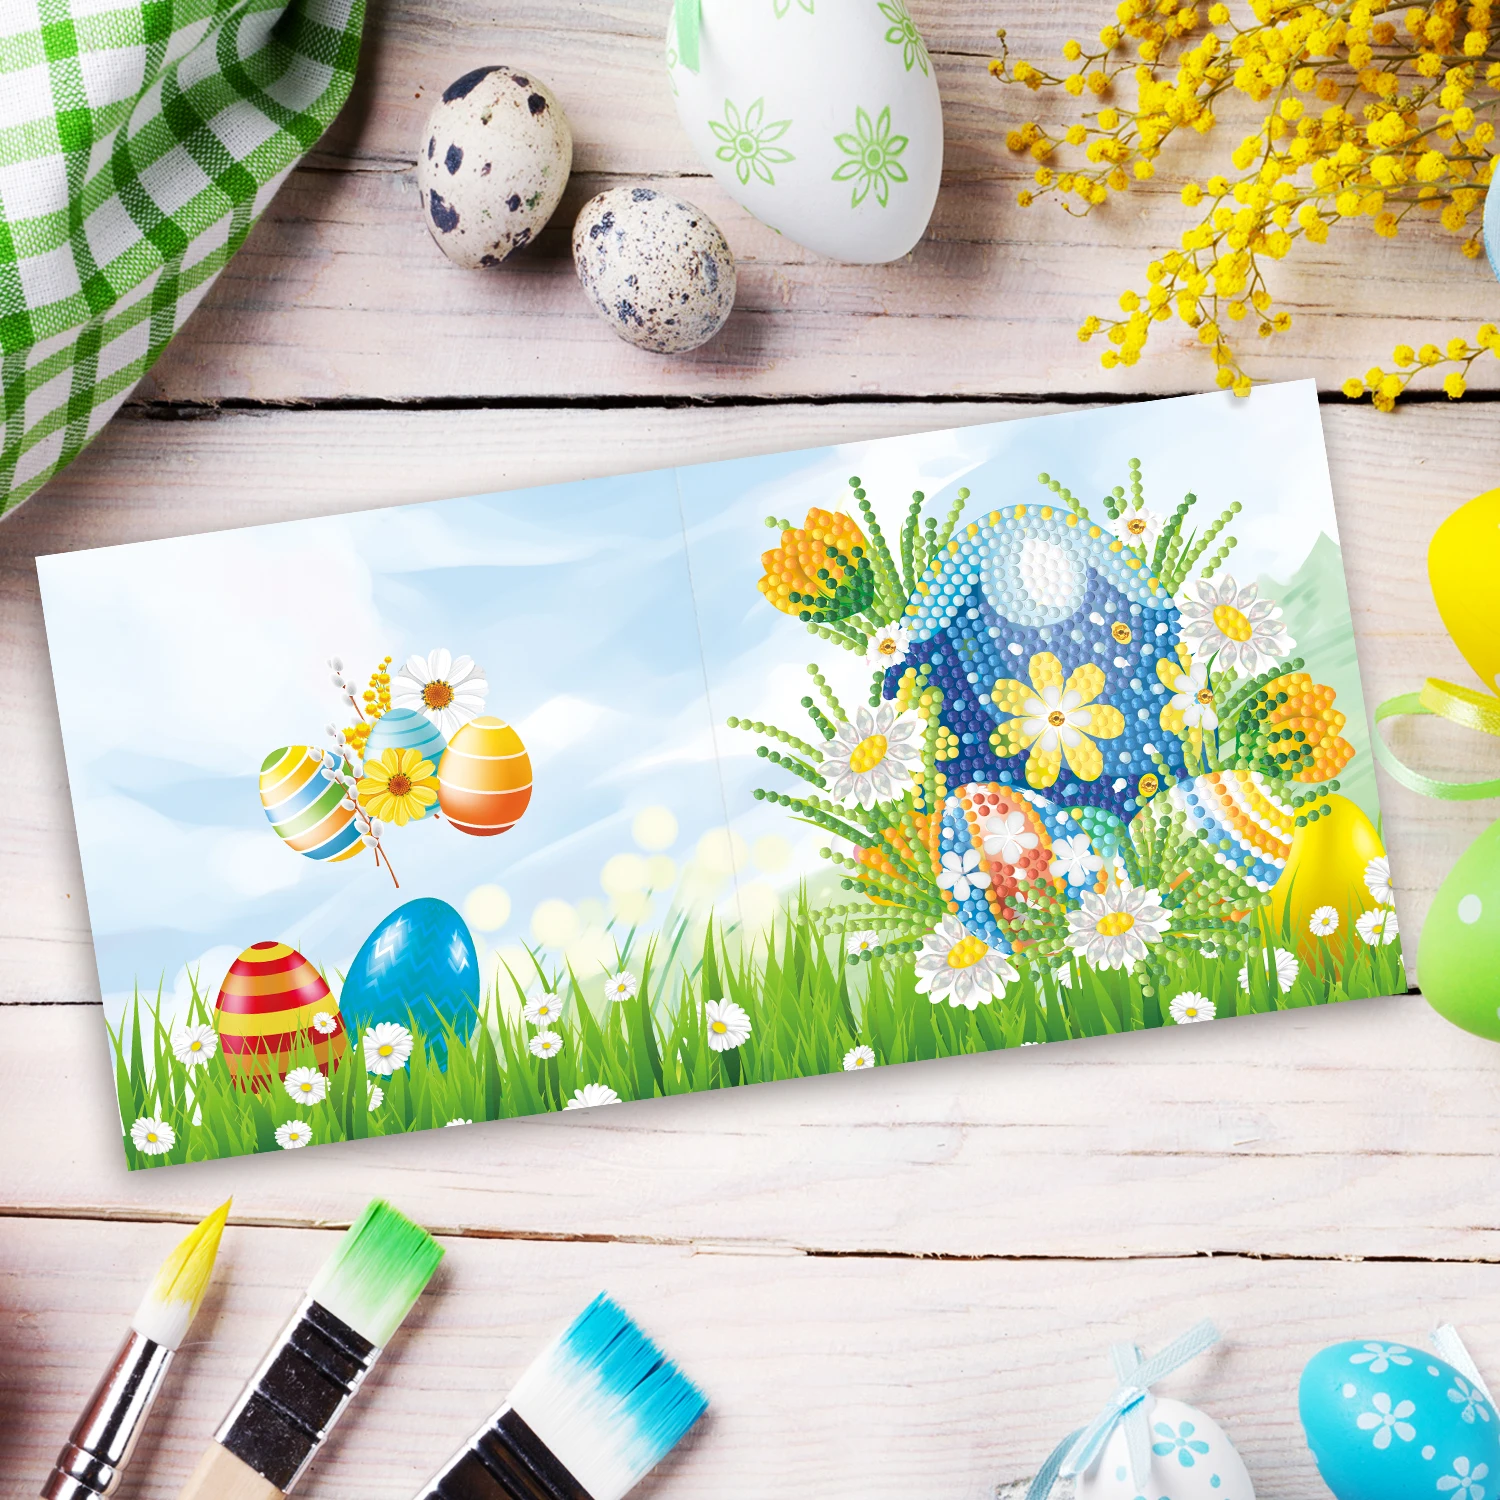 Easter Bunny Greetings Card, Diamond Painting, Diamond Art Card